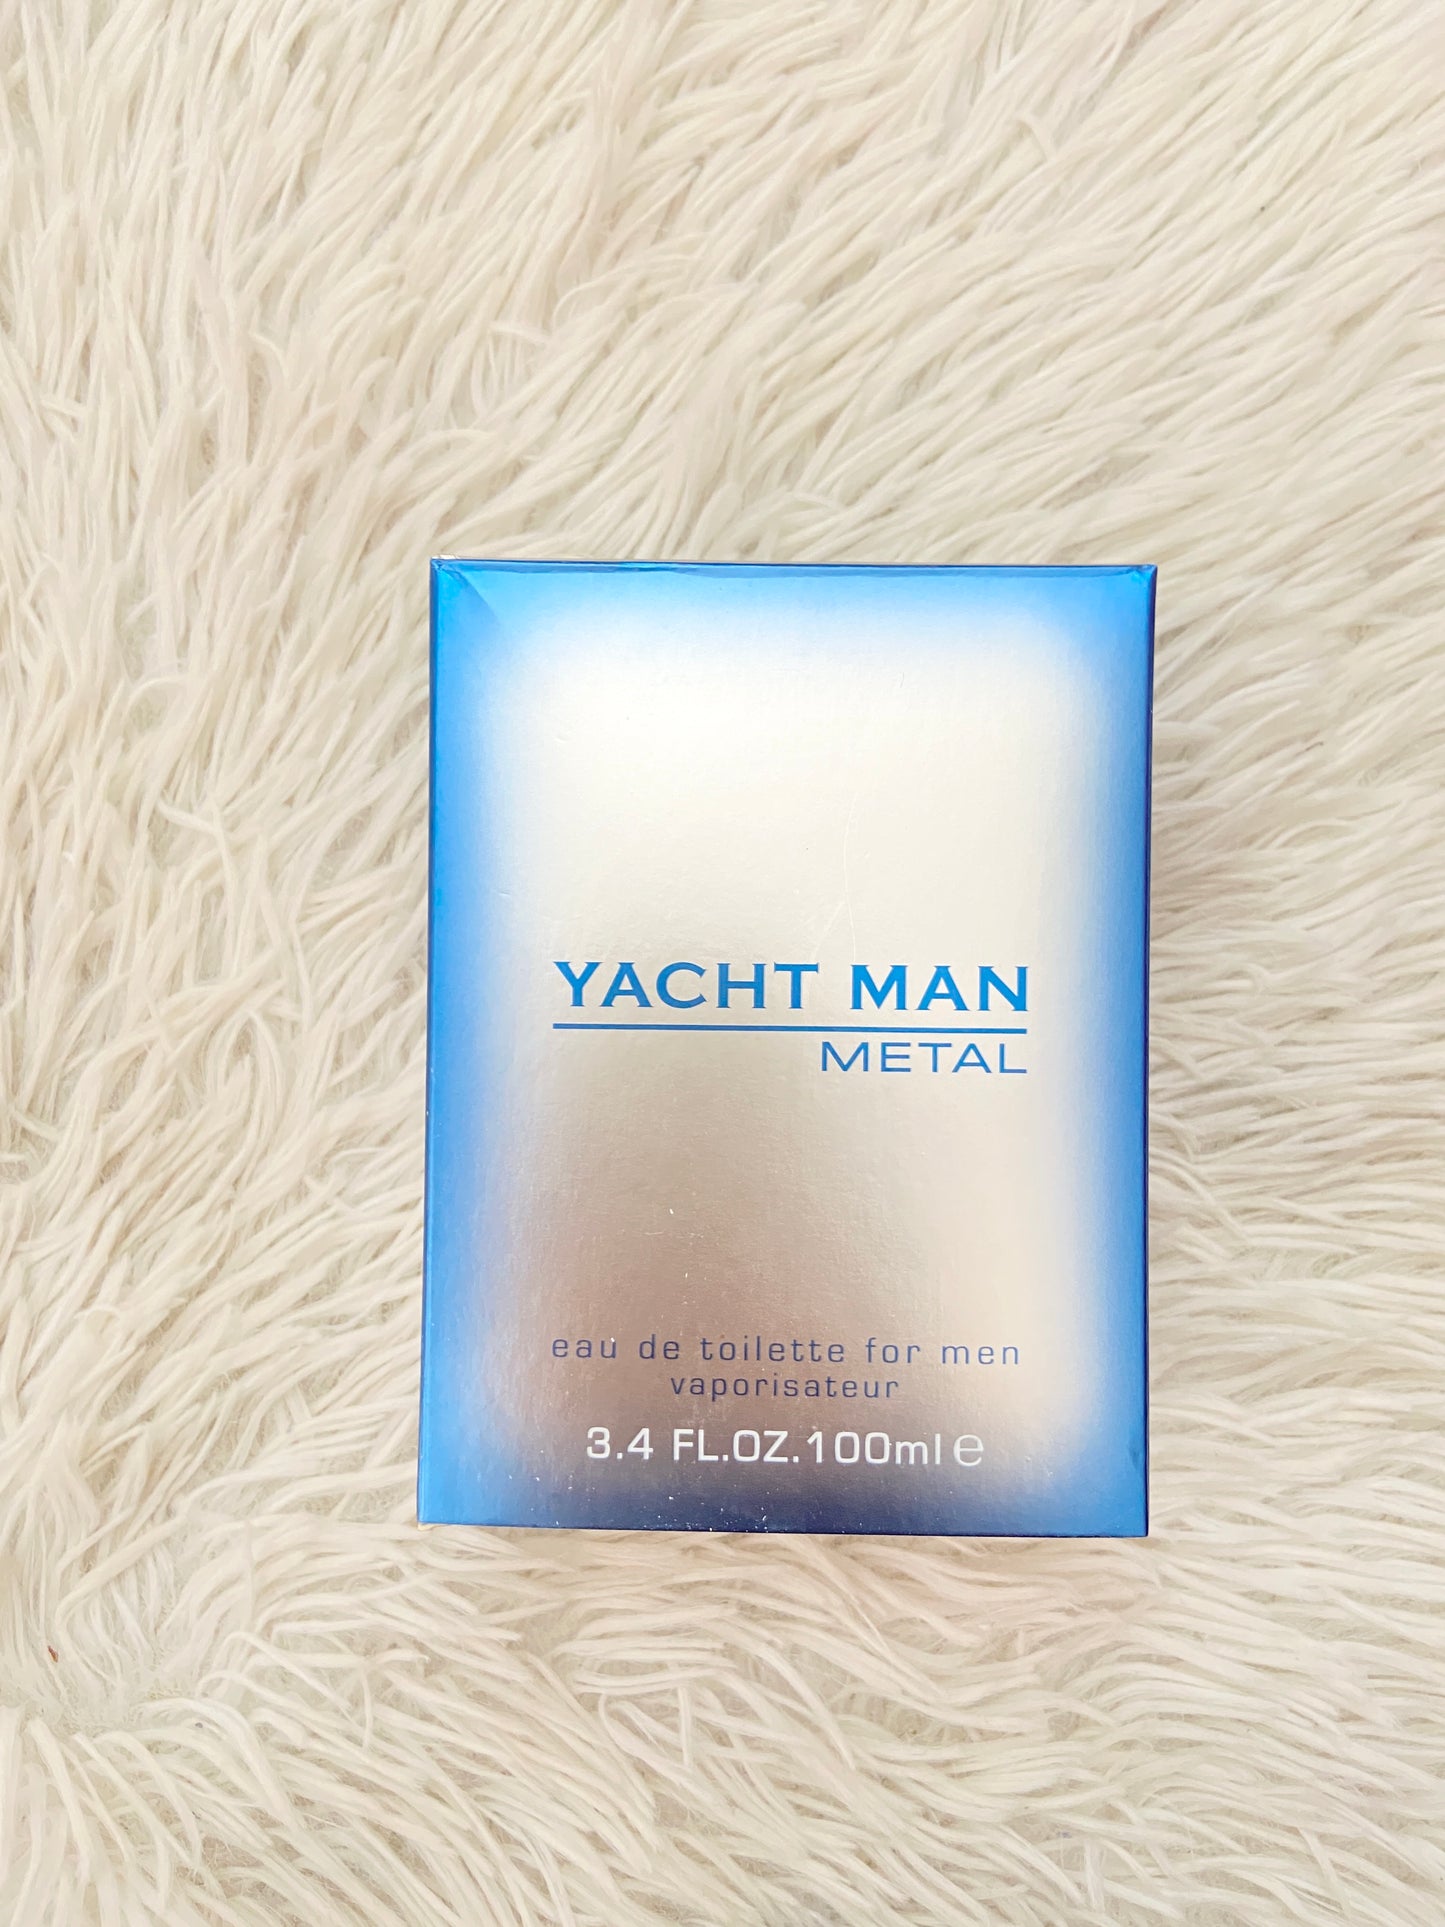 Perfume YACHT MAN  METAL original plateado con azul.